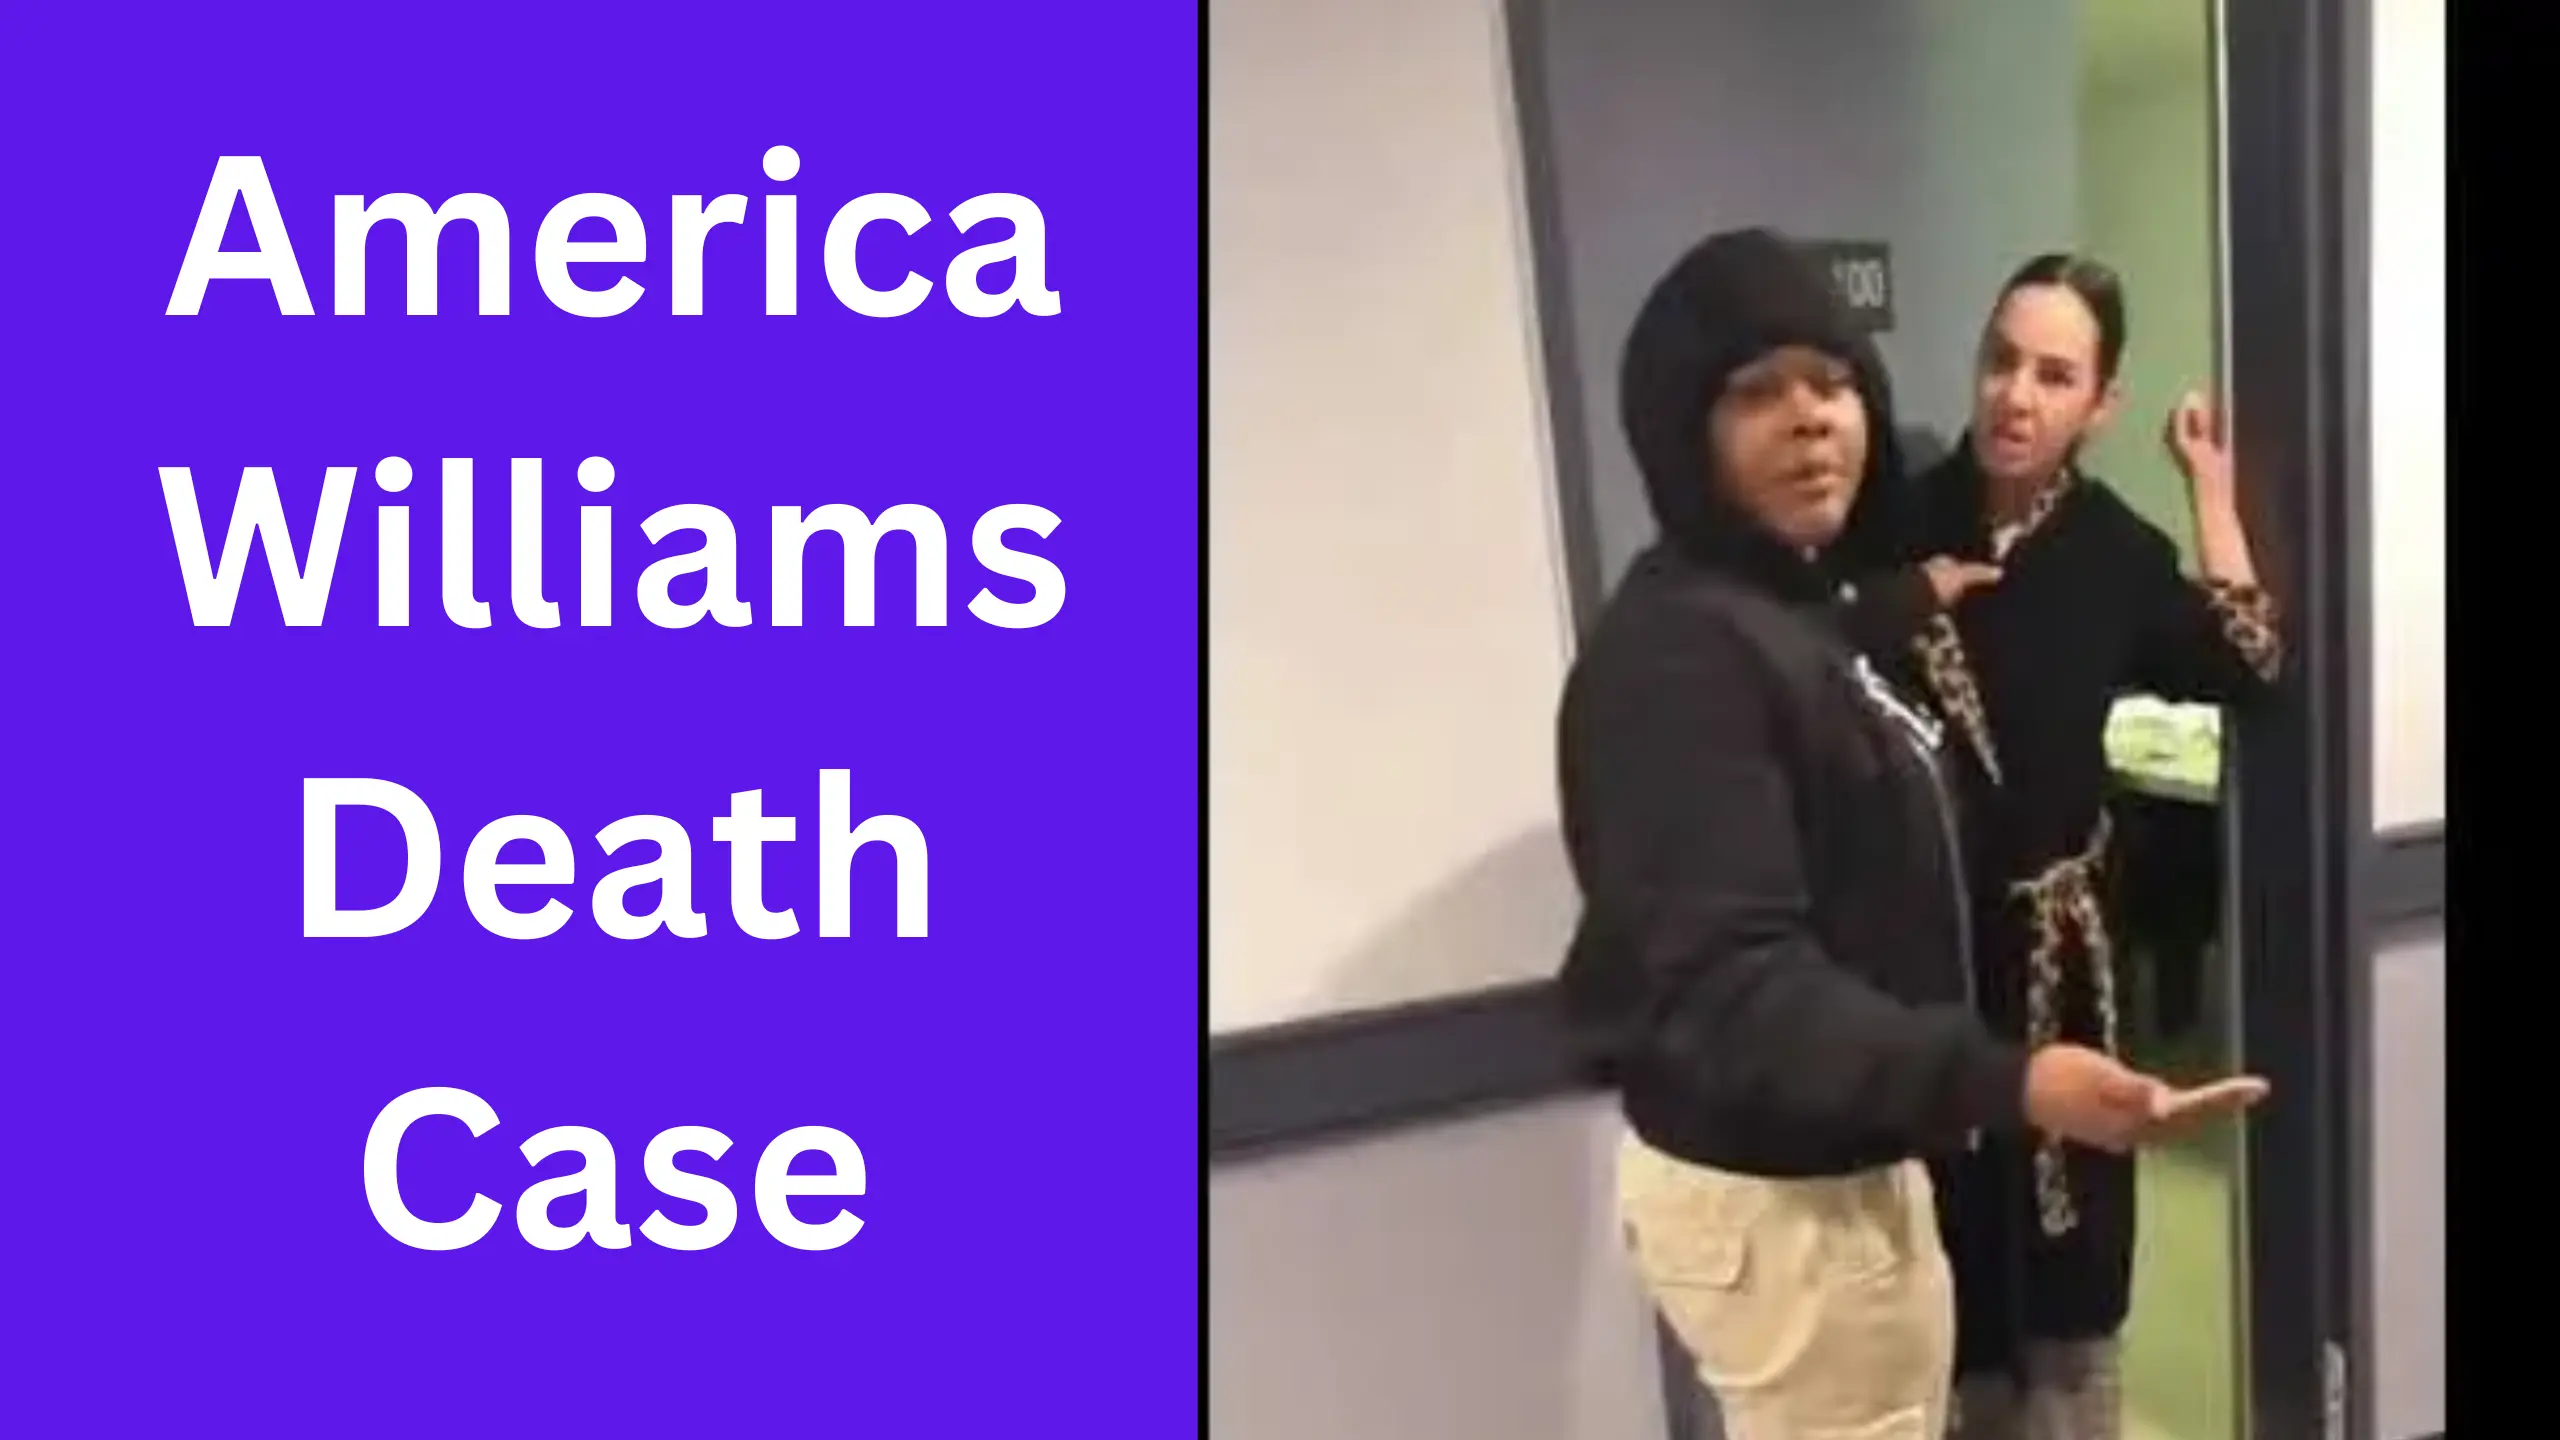 America Williams Death Case